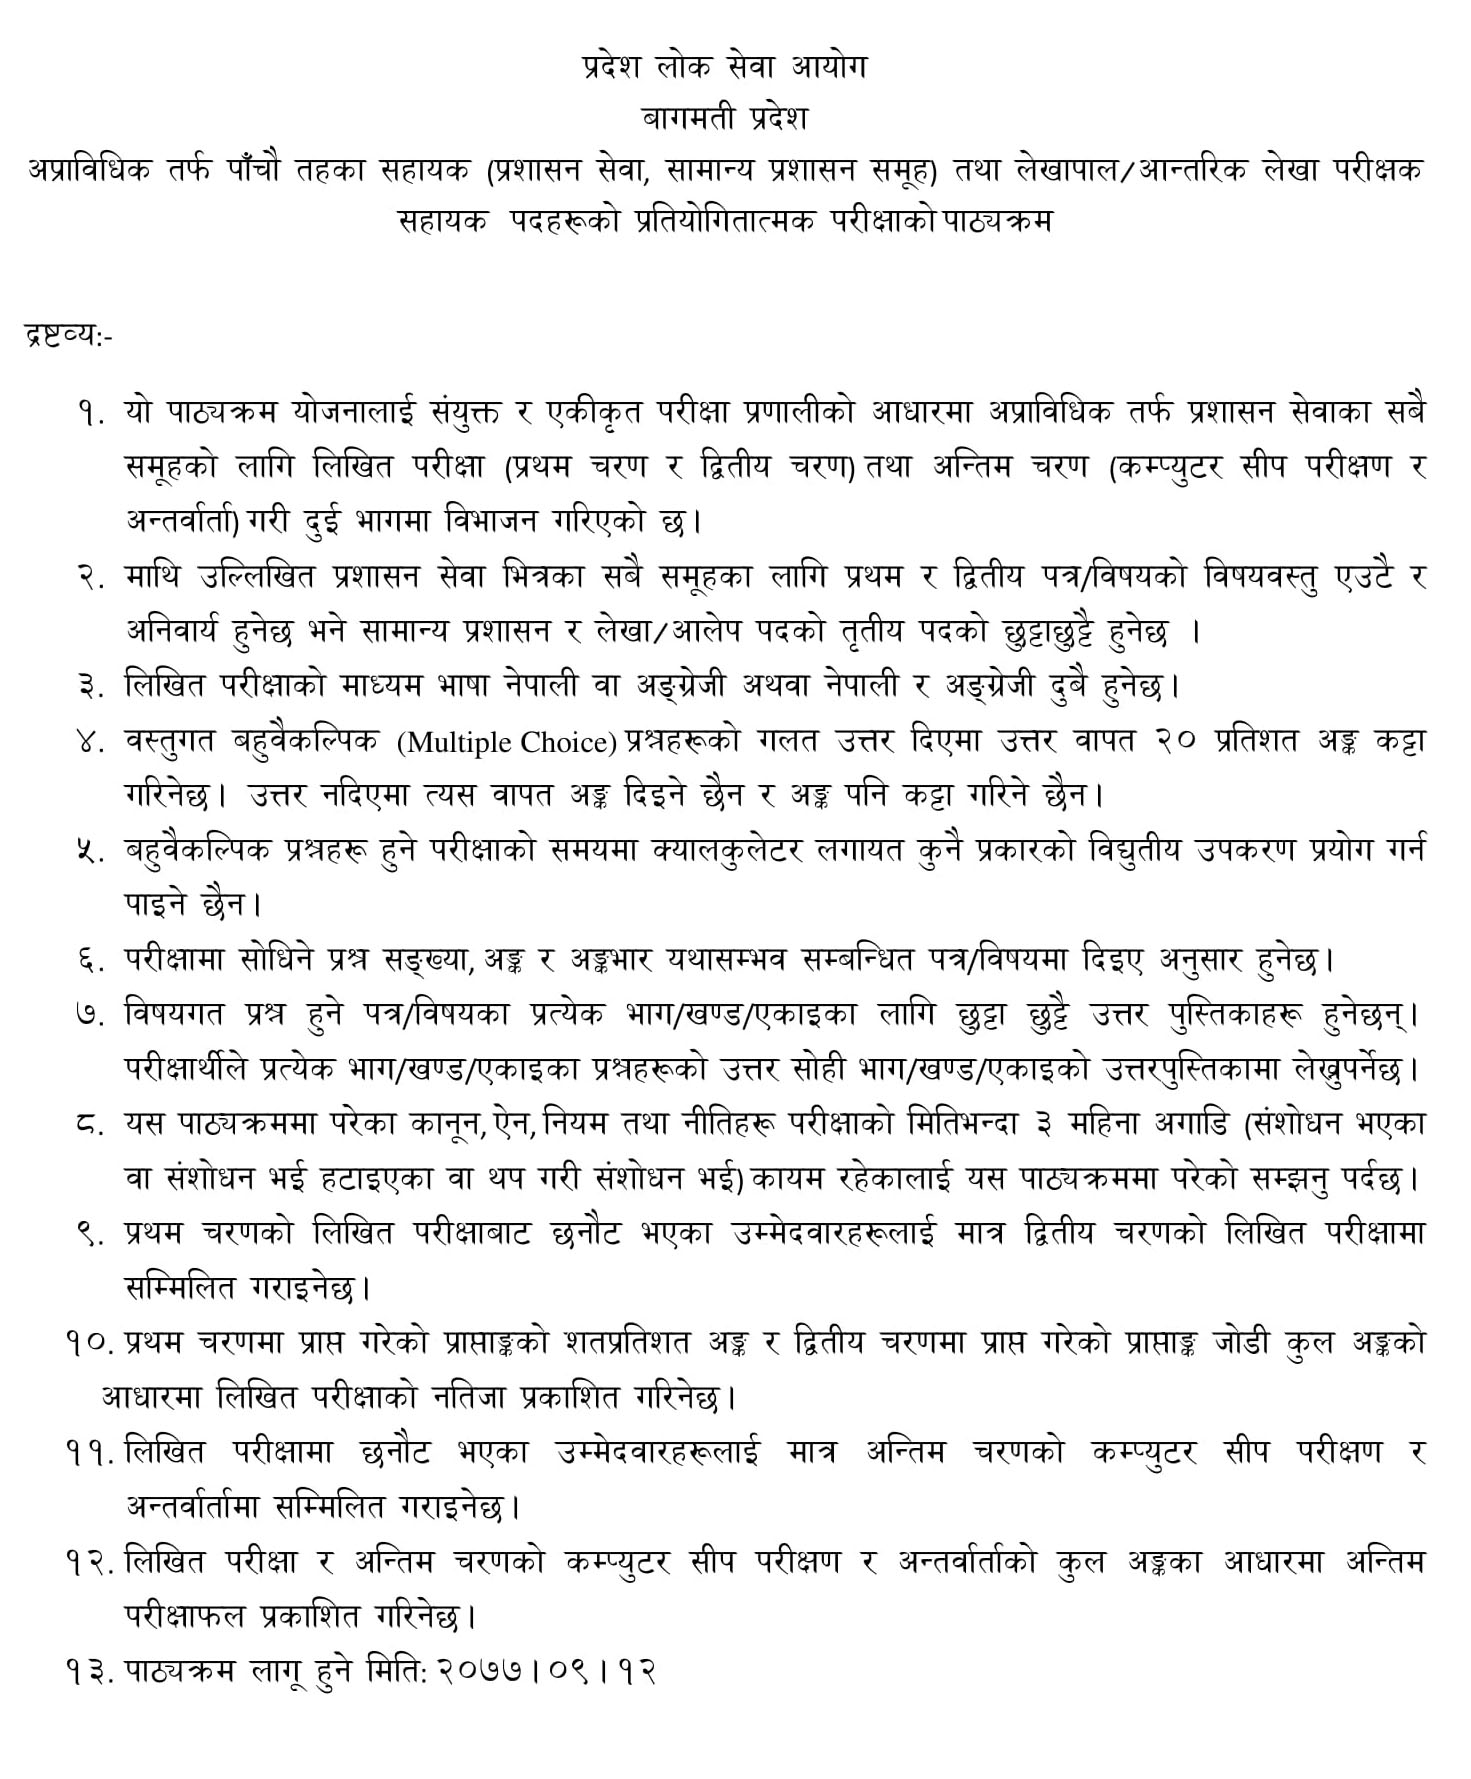 Pradesh Loksewa Aayog 5th Level Exam Syllabus: Assistant (Administrative Services, General Administration Group) and Accountant/Internal Auditor Assistant. Bagmati 5th Level (पाँचौ पद) Exam Syllabus. Bagmati Pradesh Loksewa 5th Level Exam Syllabus.